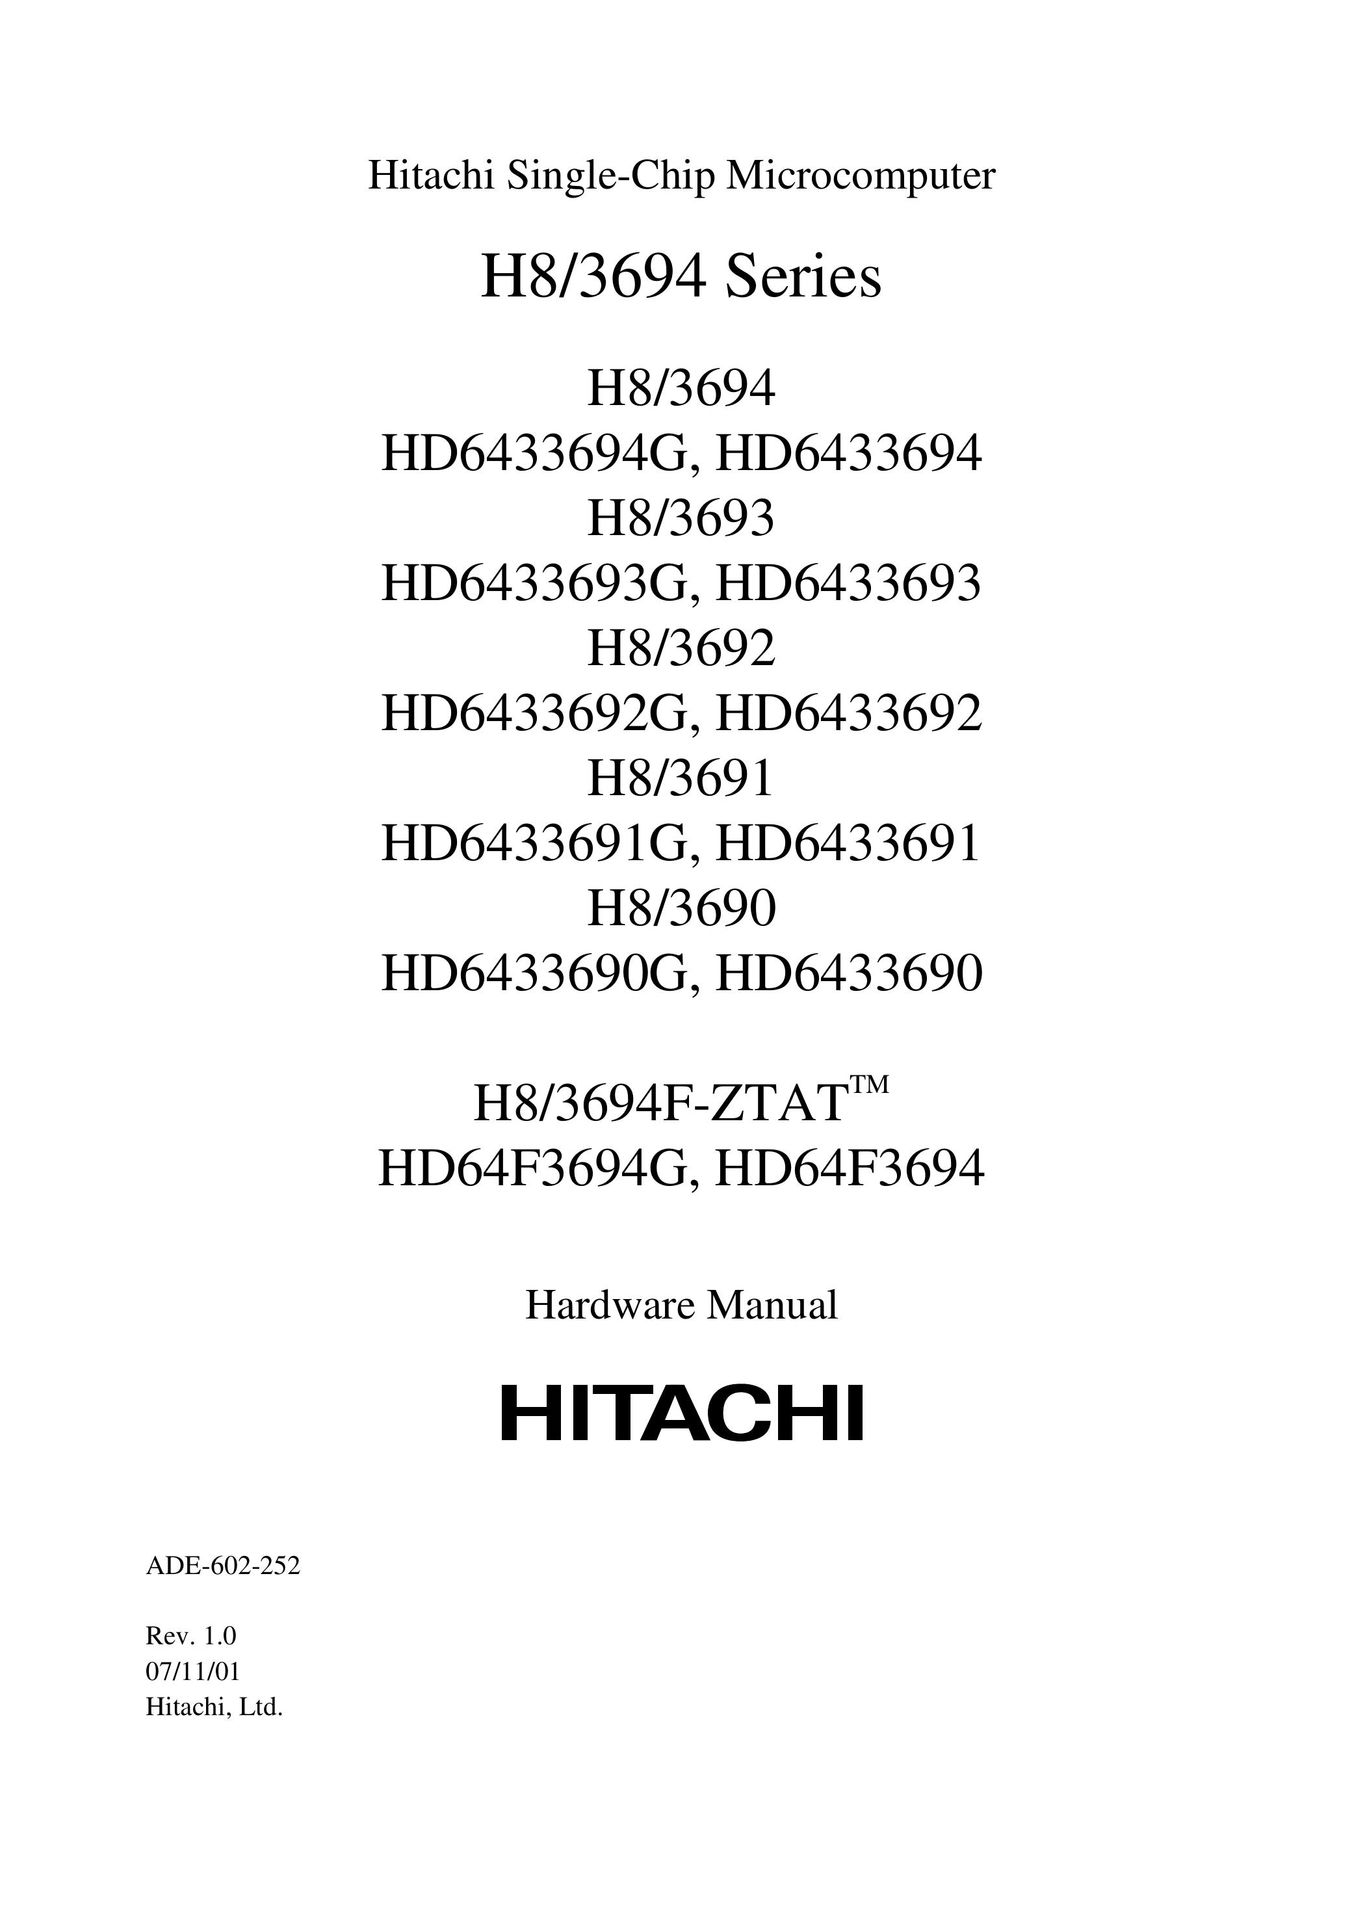 Hitachi HD6433691G TV Mount User Manual